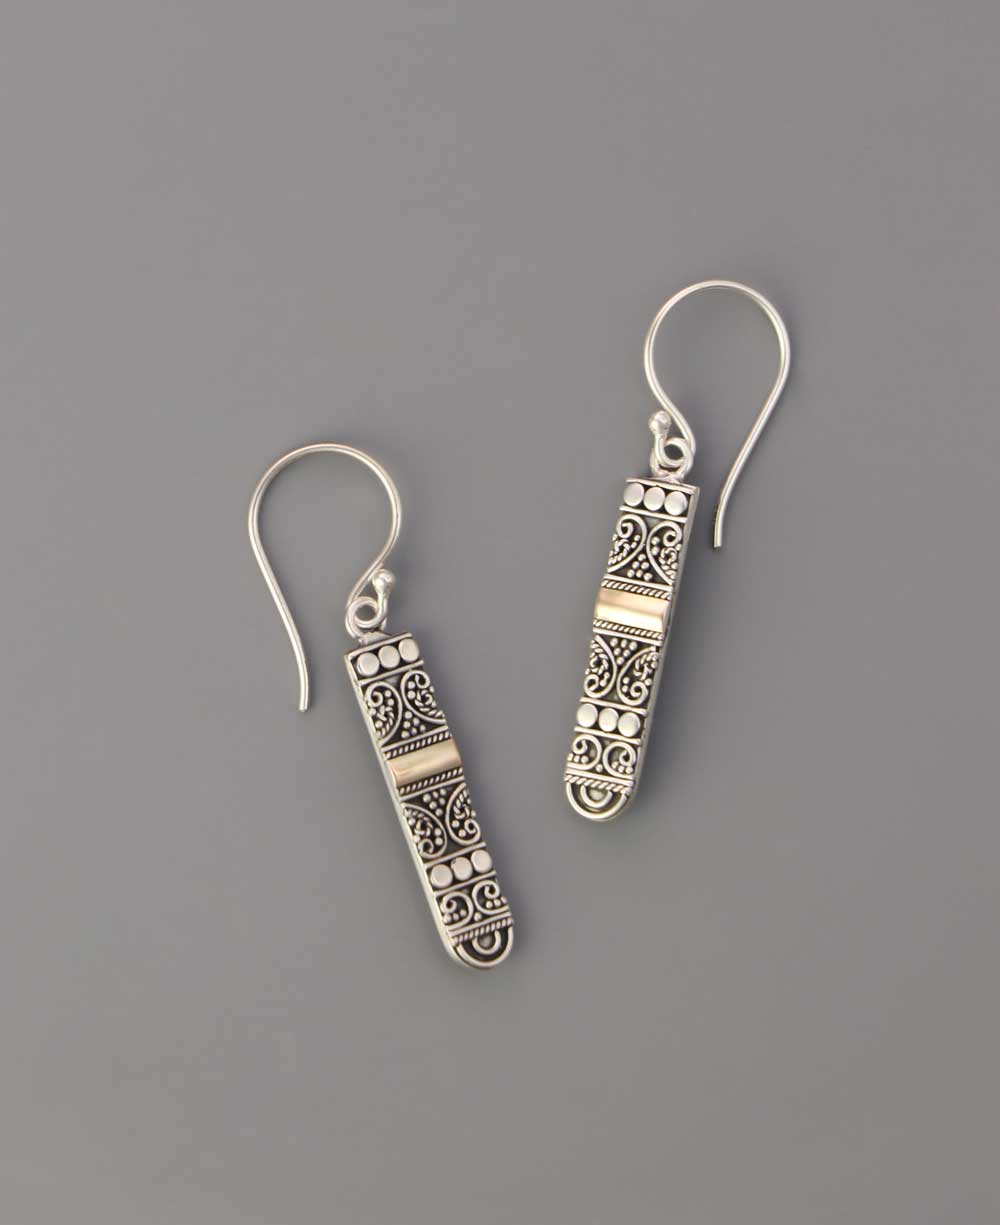 Thin sterling silver filigree earrings